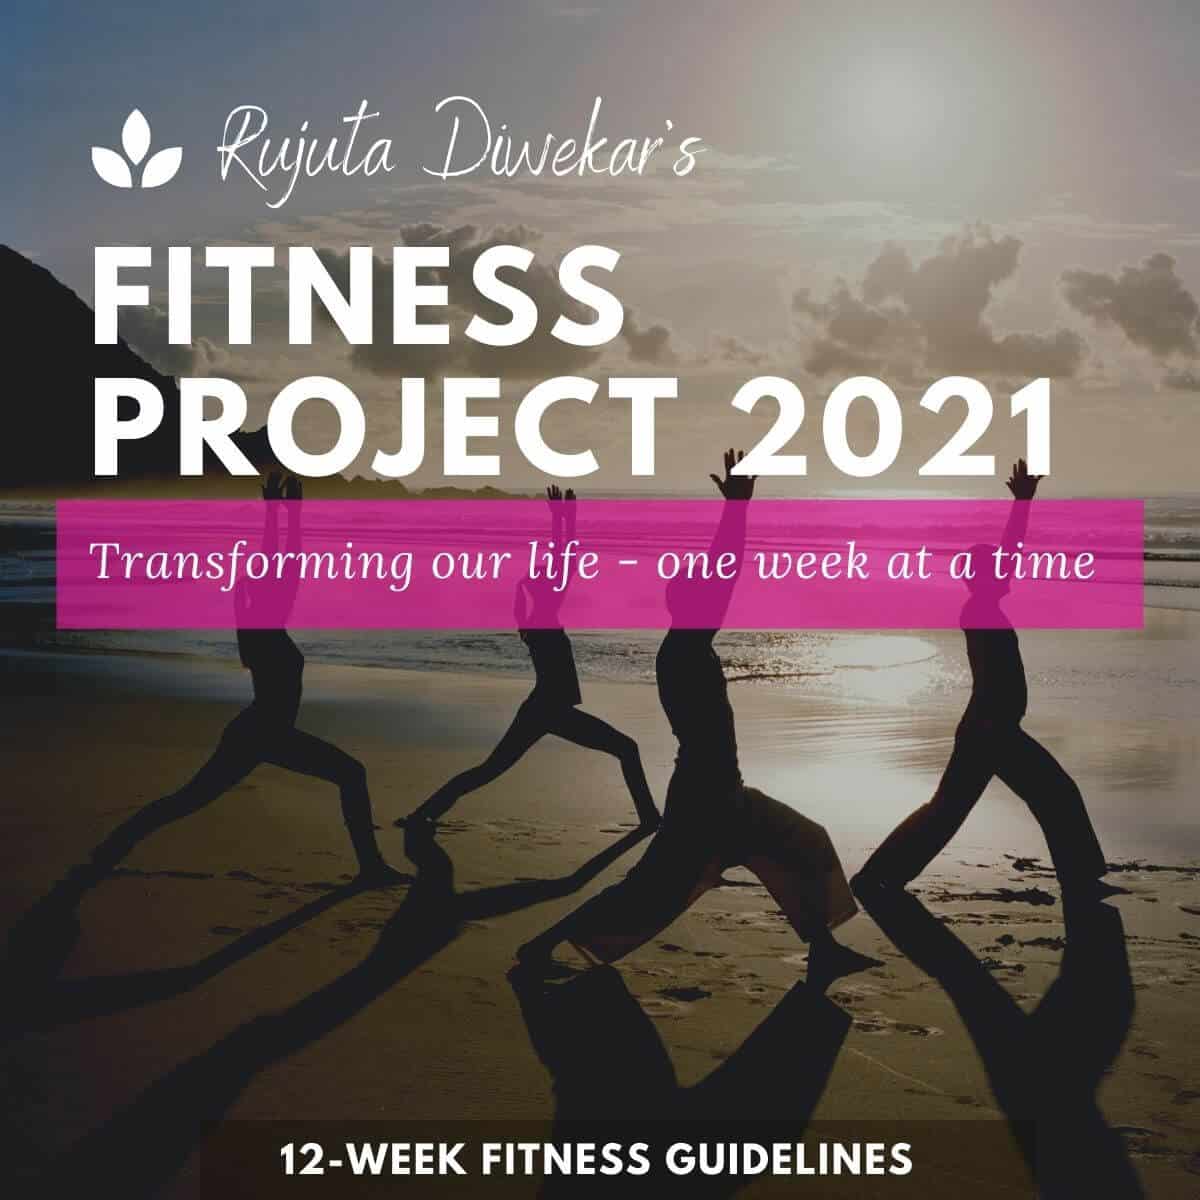 12 Week Fitness Project 2021 – Guidelines by Rujuta Diwekar